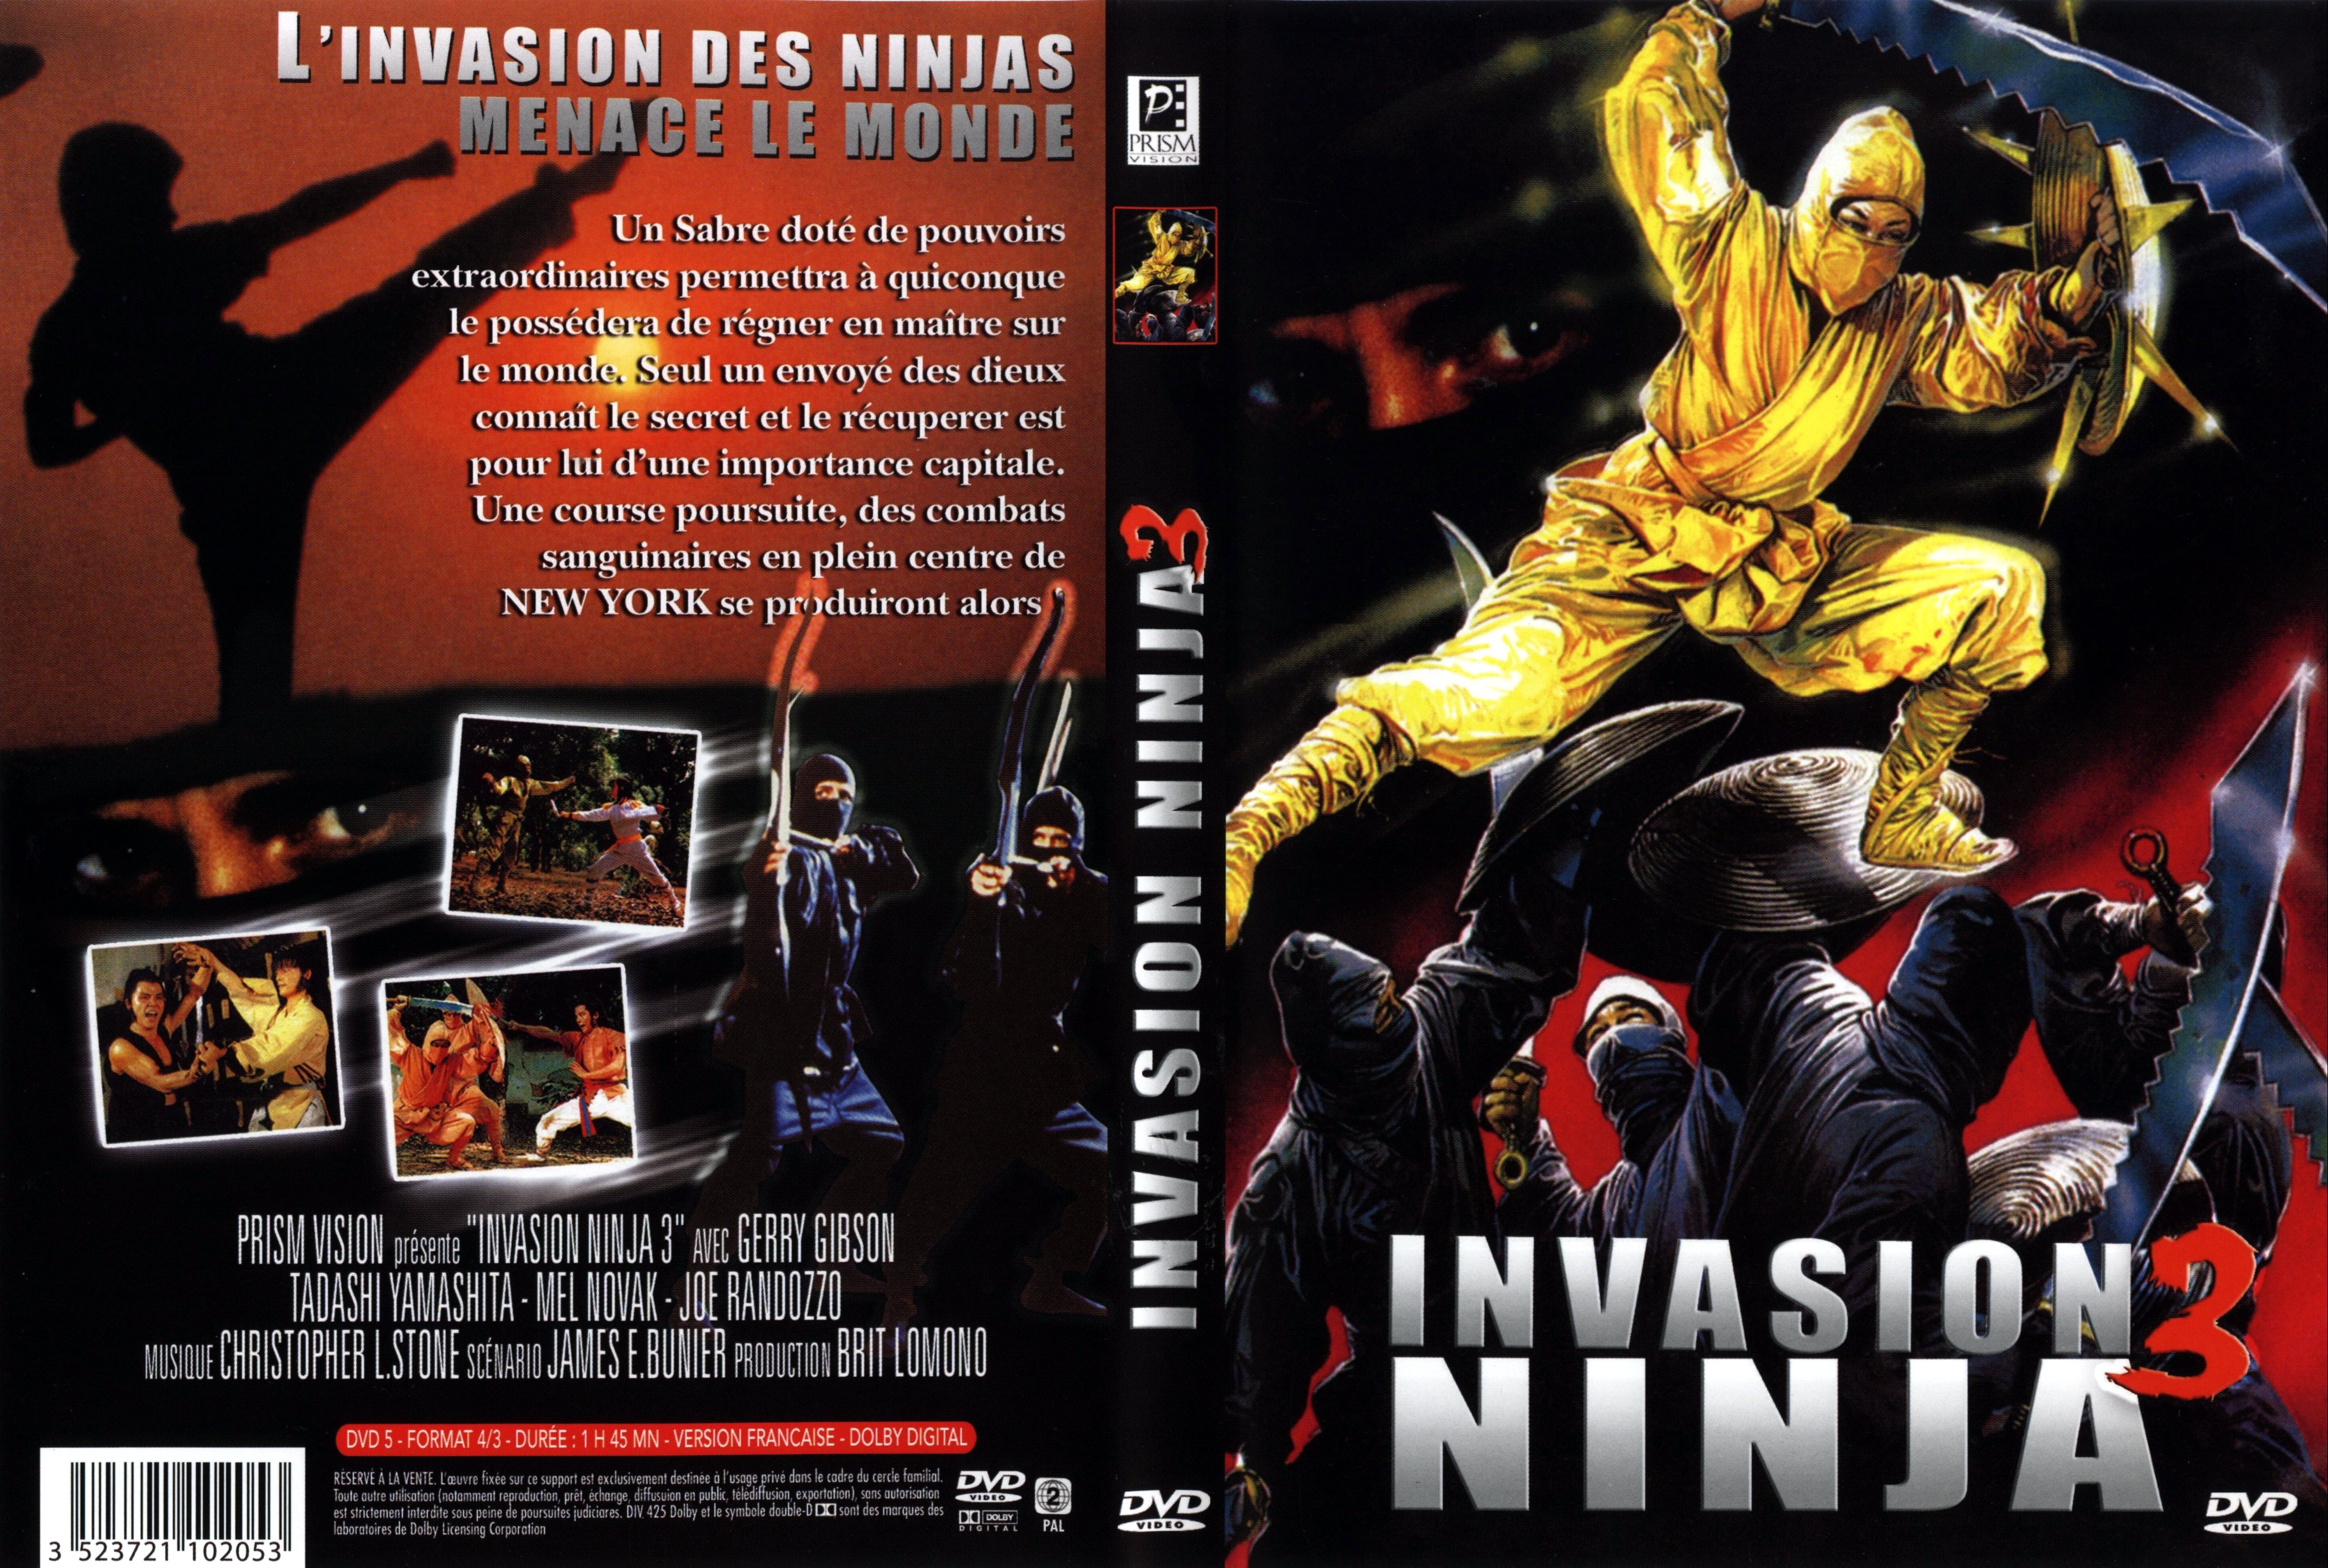 Jaquette DVD Invasion ninja 3